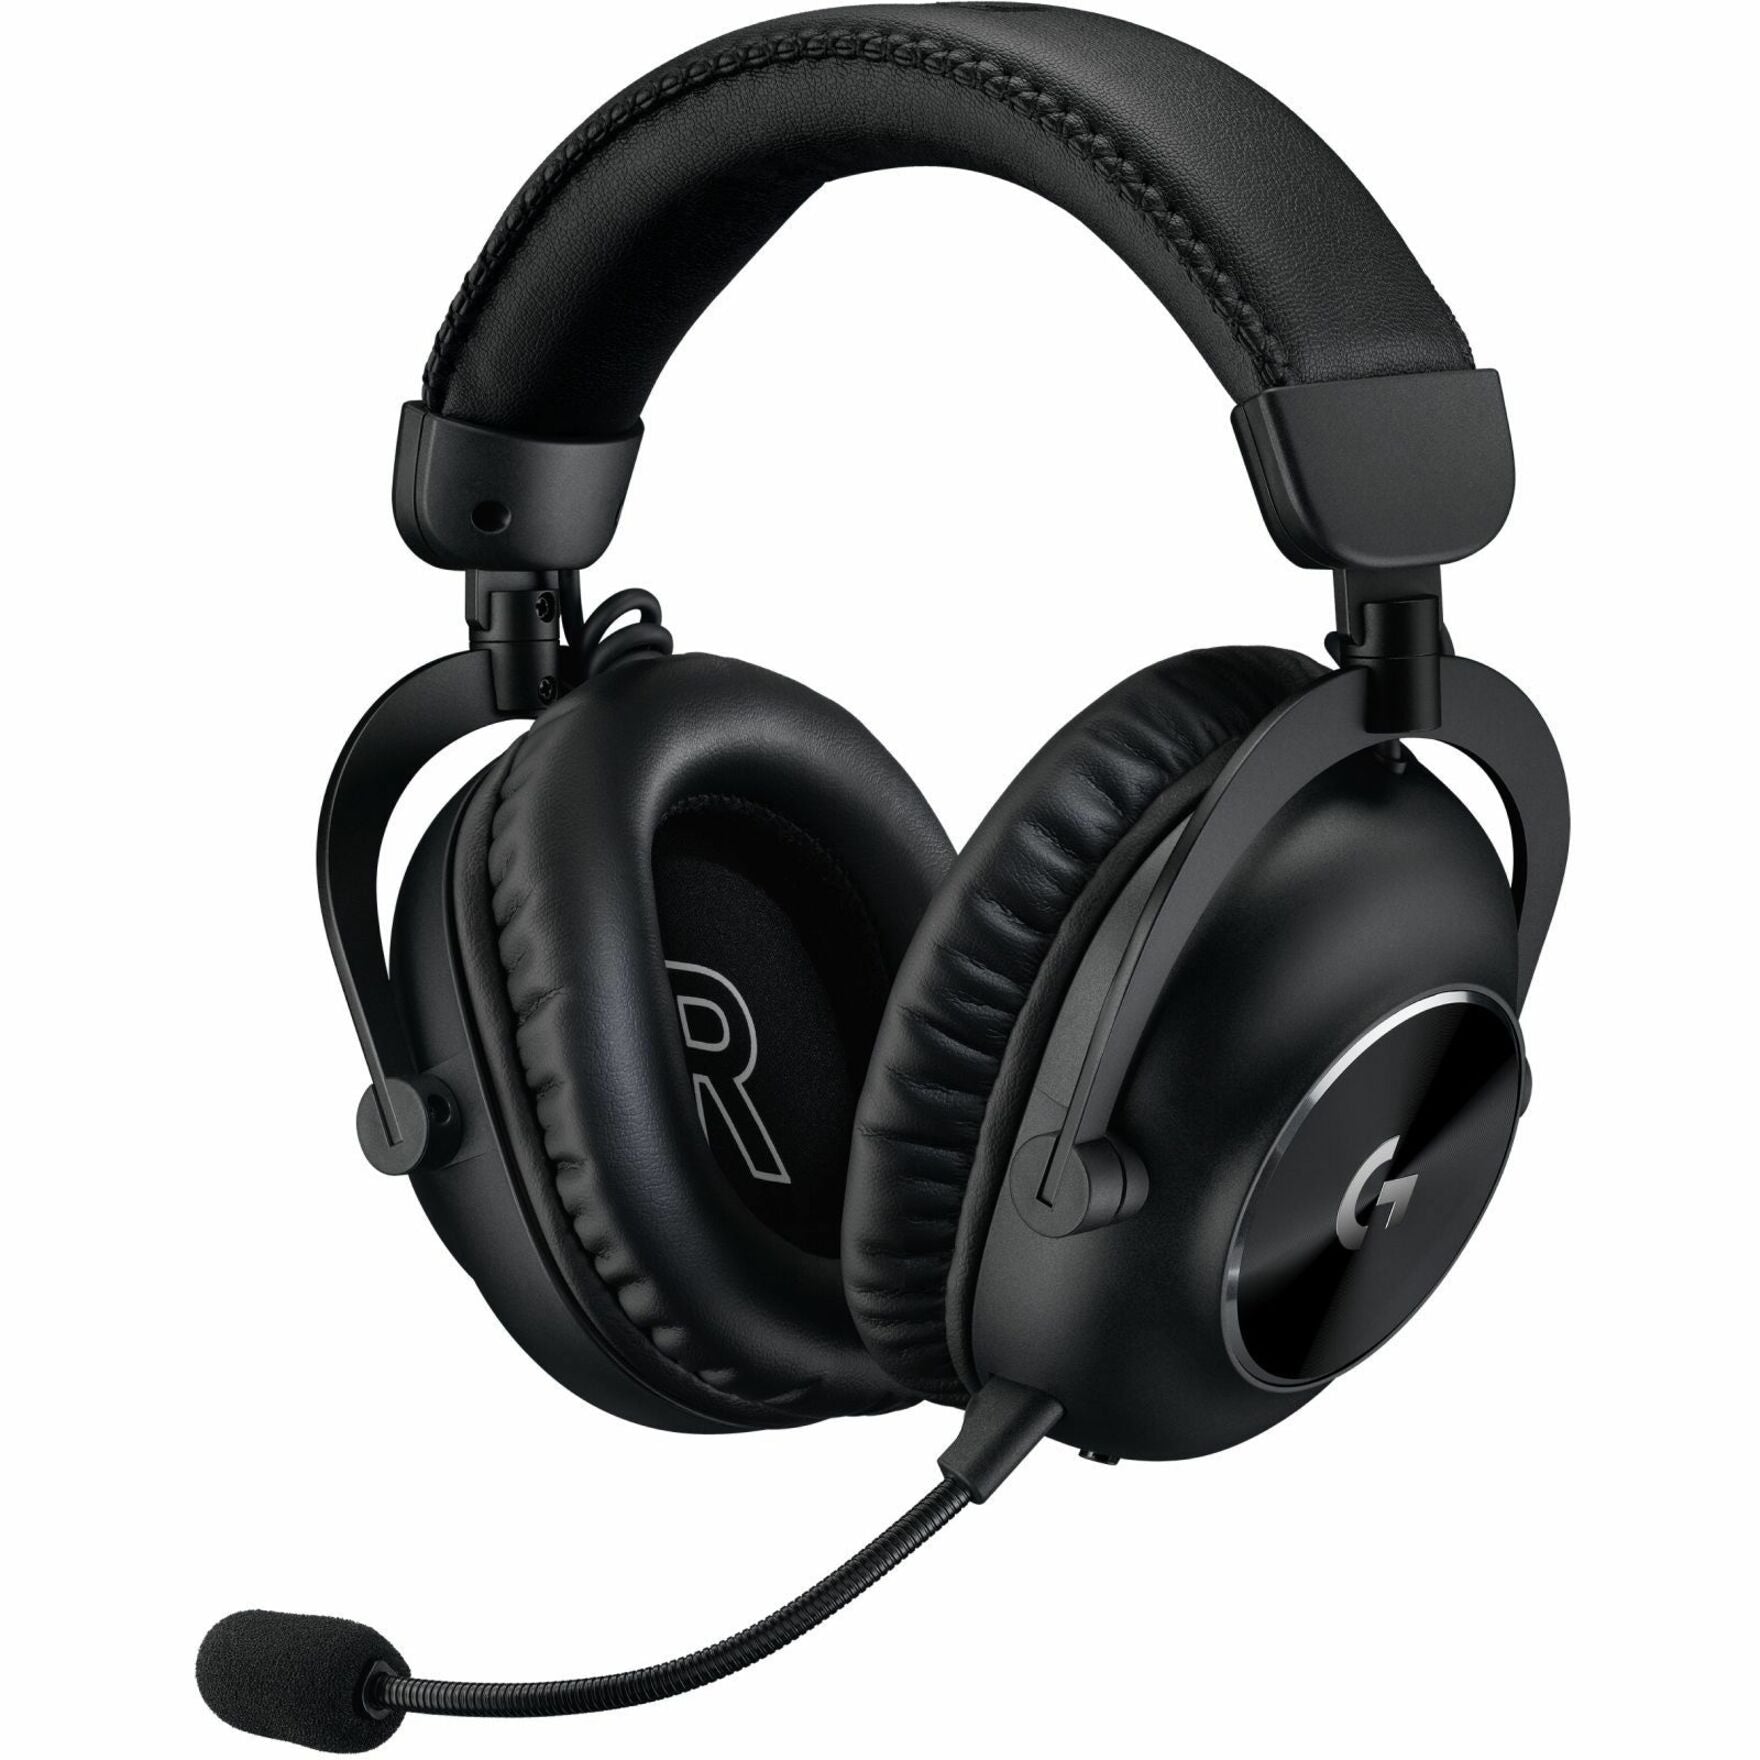 Logitech G 981-001262 PRO X 2 Gaming Headset, Durable, Comfortable, 7.1 Surround Sound, Wireless Technology